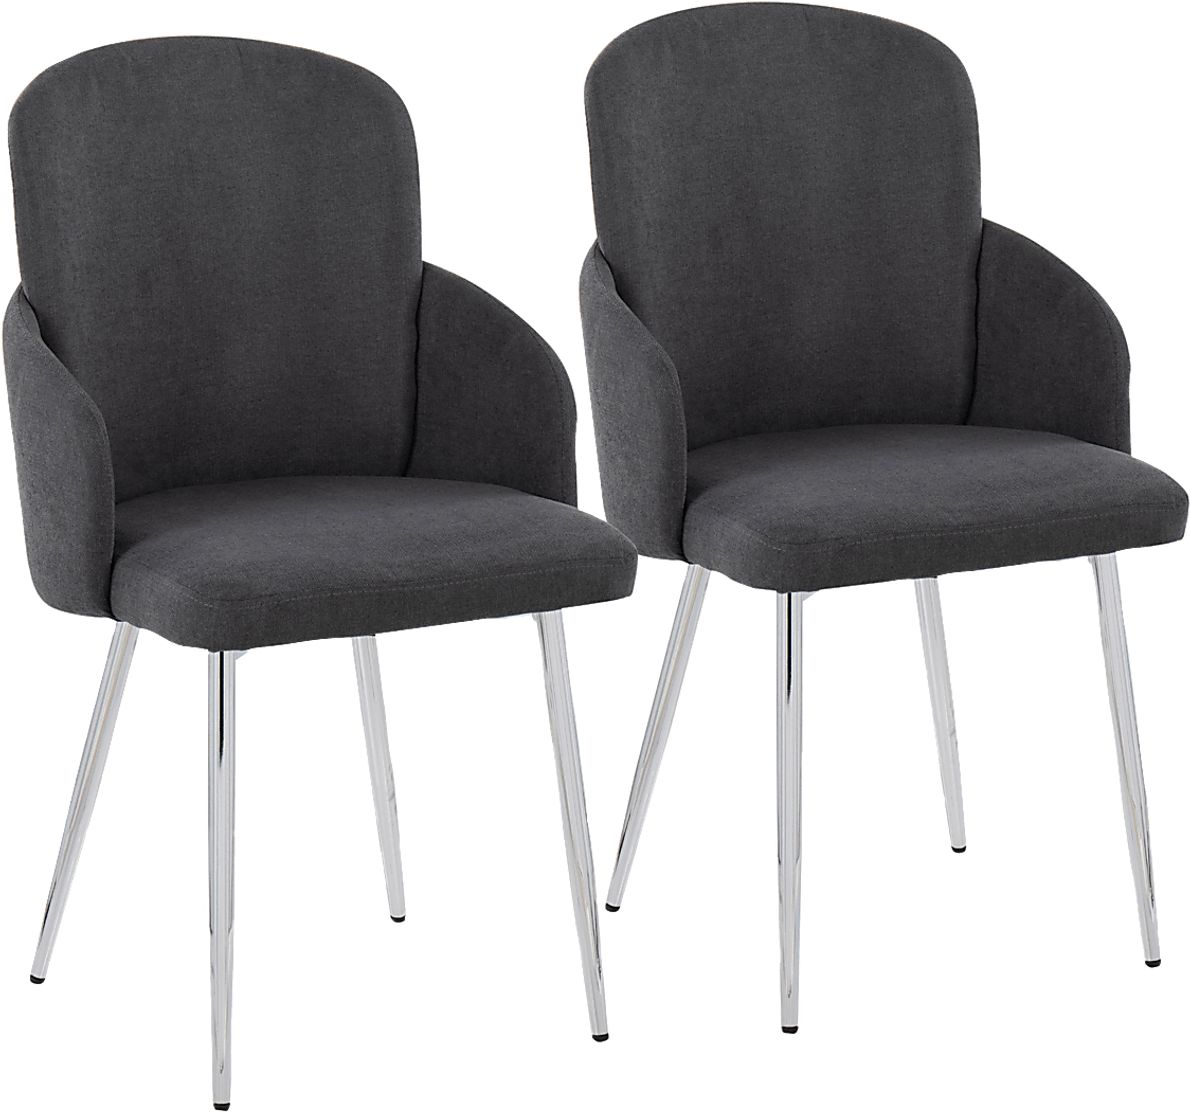 Maglista III Dark Gray Dining Chair Set of 2